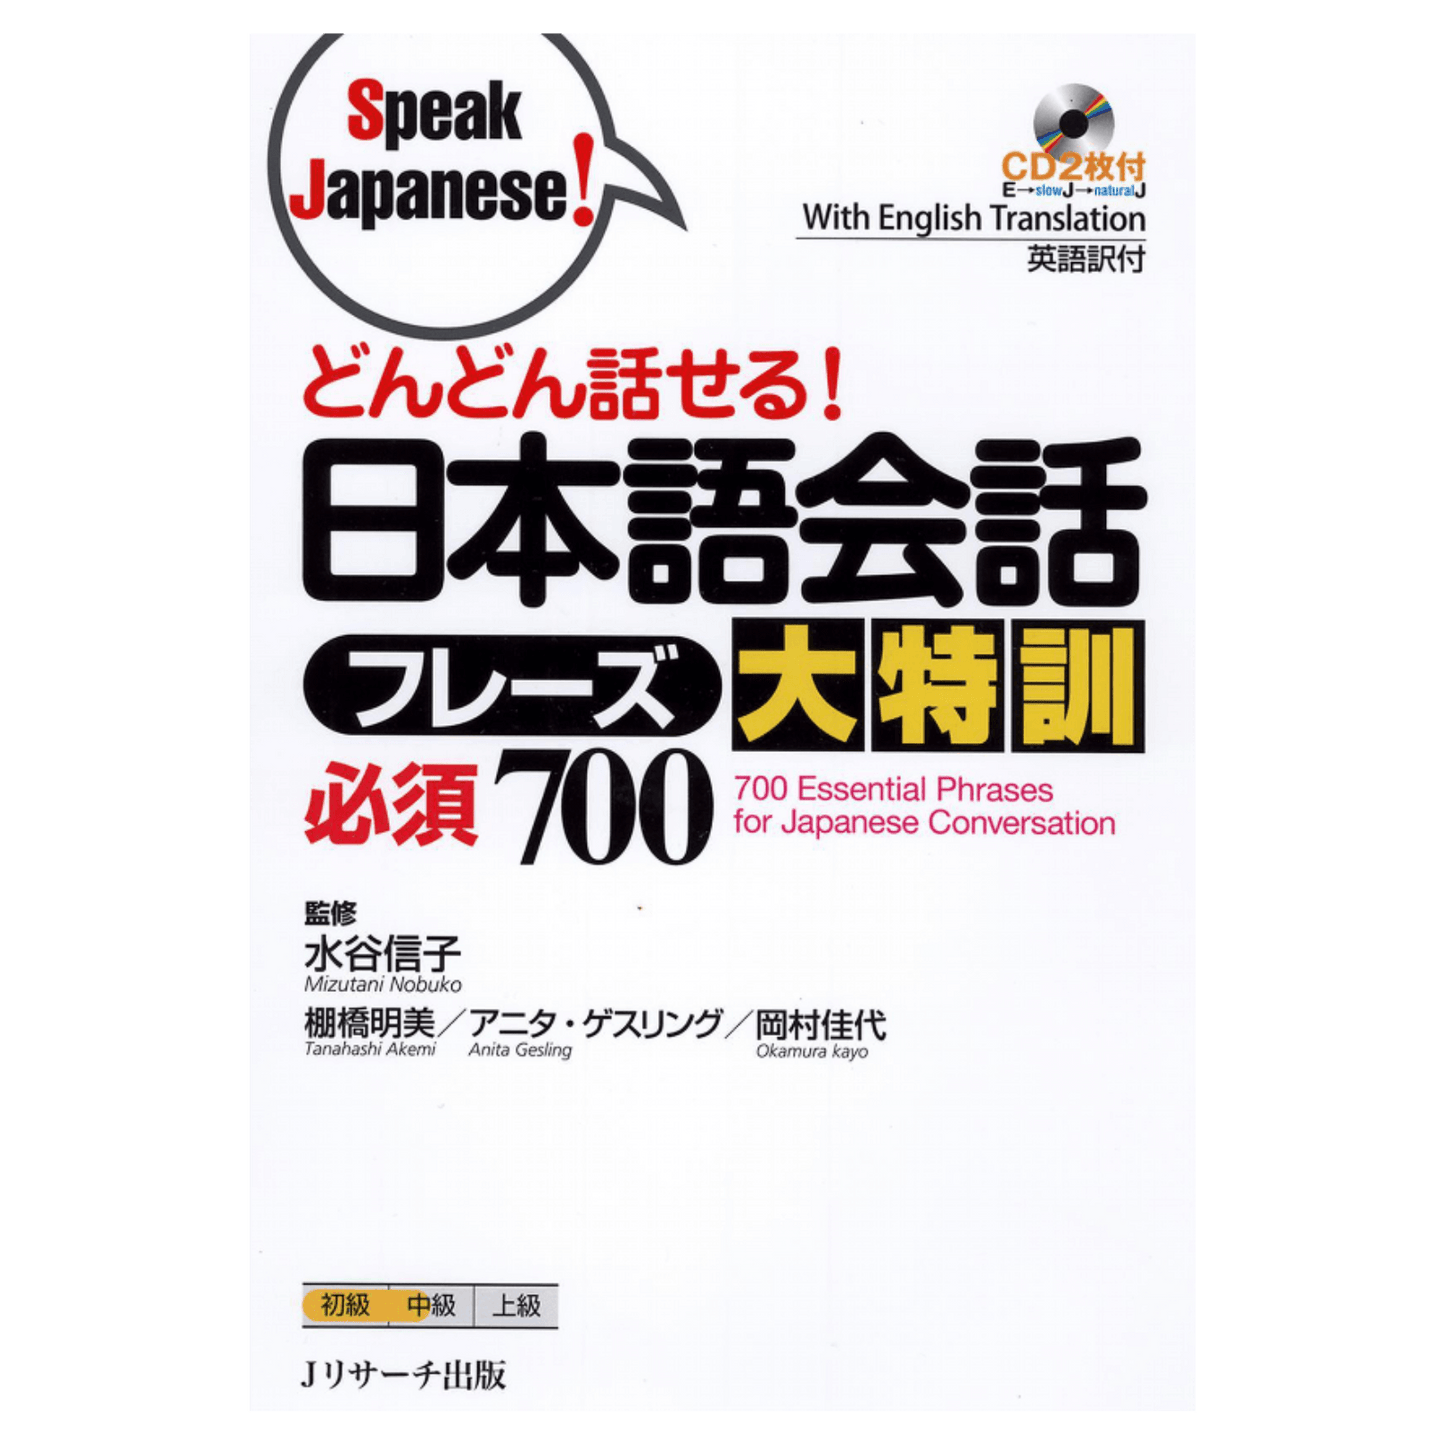 Manual Japonés | ¡Hablar japones! -¡¡¡¡¡¡¡¡¡¡¡¡¡¡¡¡¡¡¡¡¡¡¡ ChitoroShop